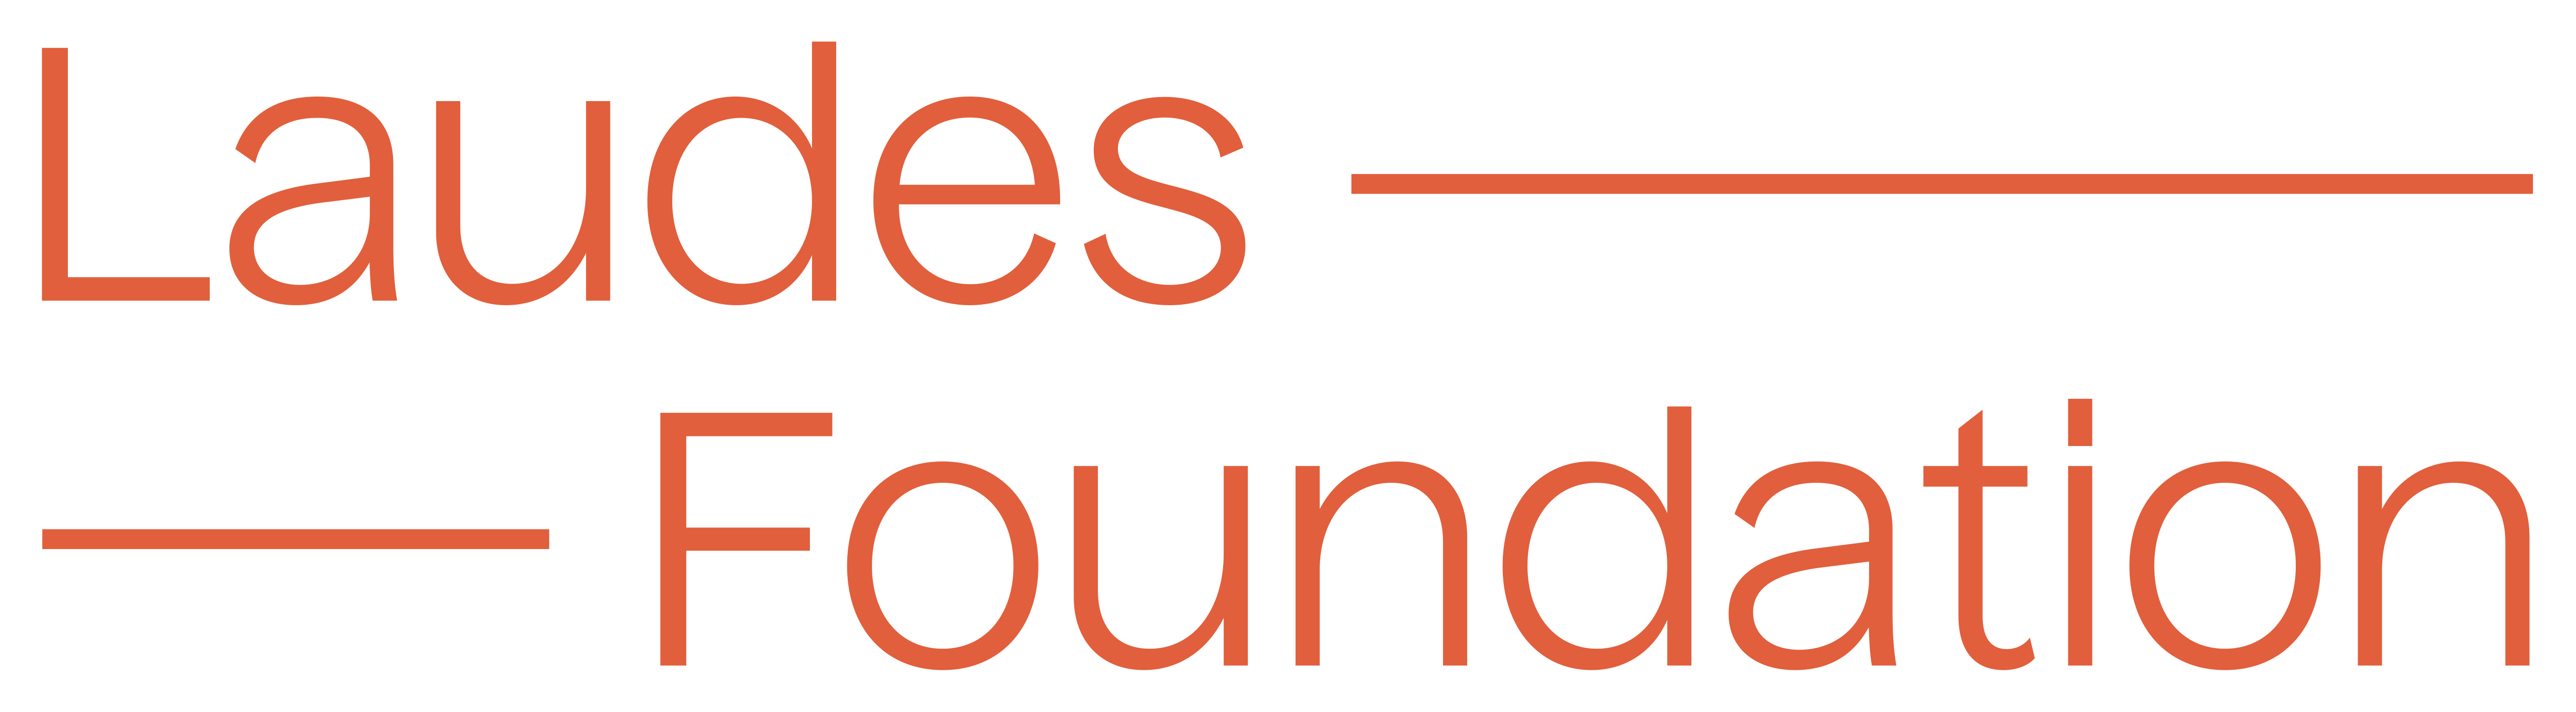 laudes-foundation